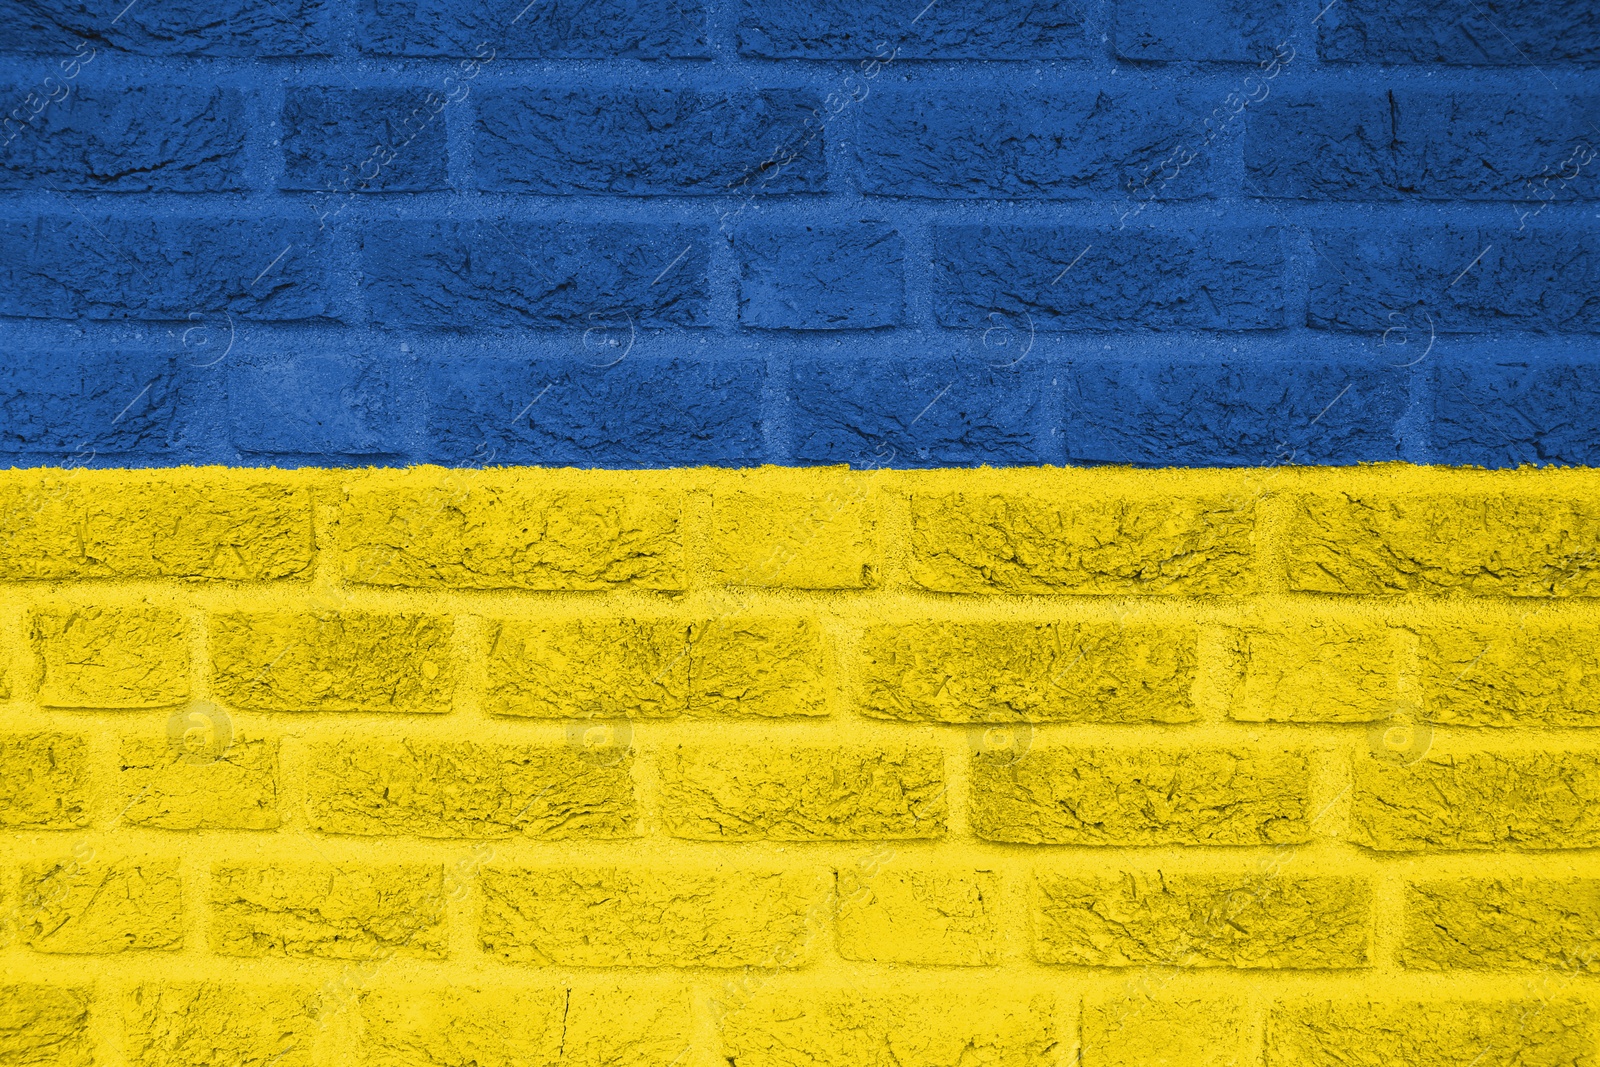 Image of National flag of Ukraine painted on brick wall